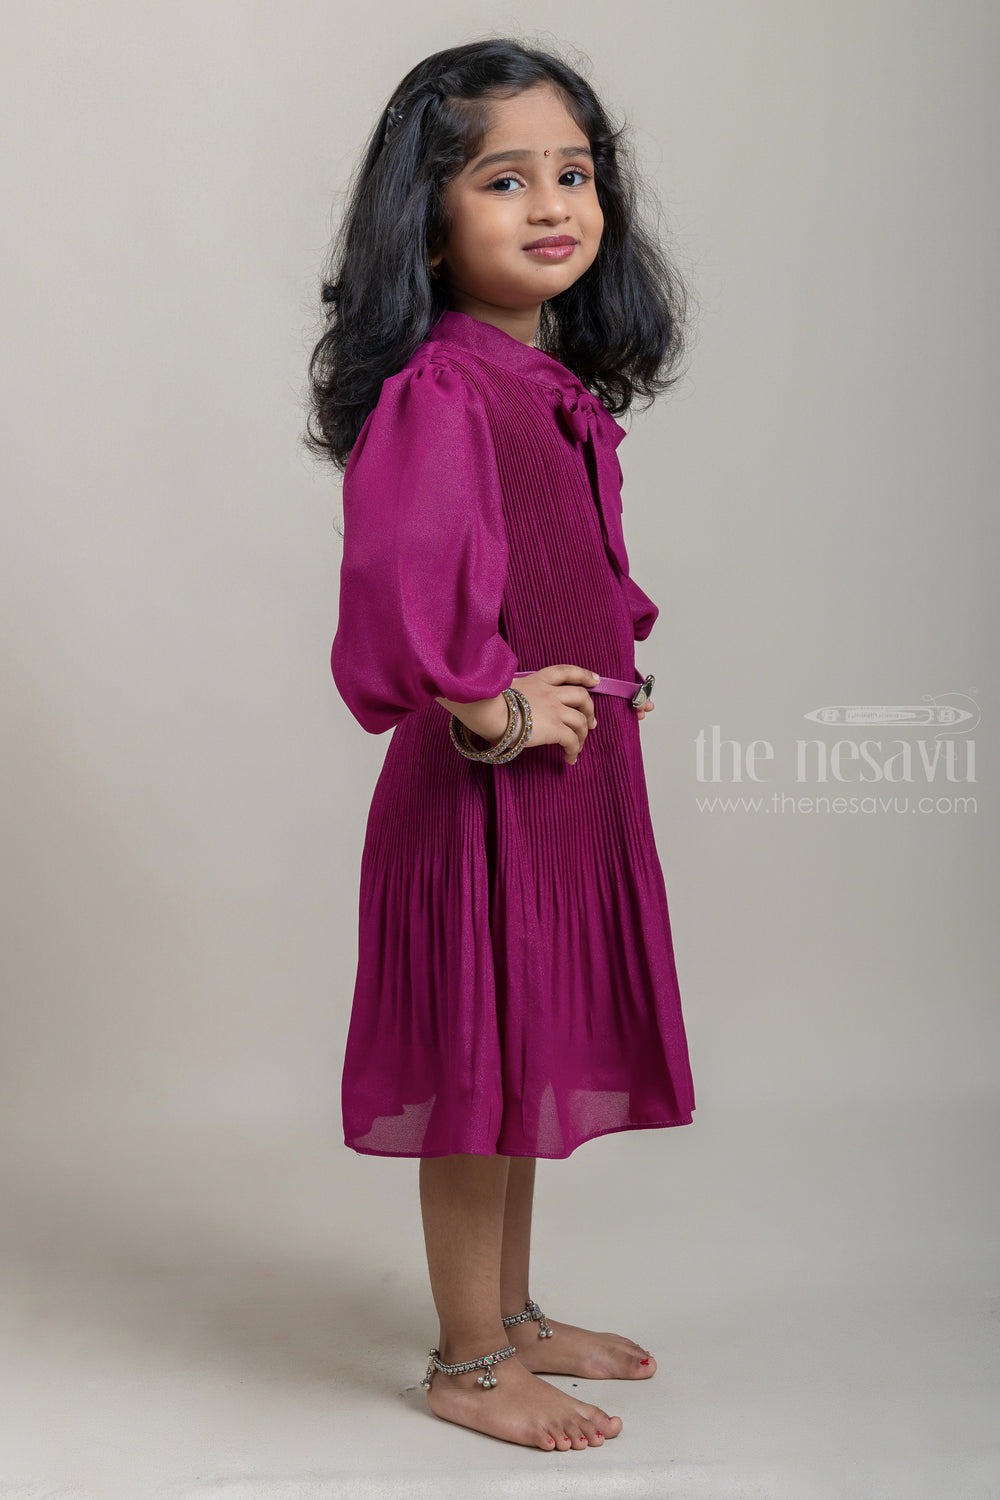 The Nesavu Frocks & Dresses Small Pleated Purple Frock with Balloon Sleeves for Baby Girls psr silks Nesavu